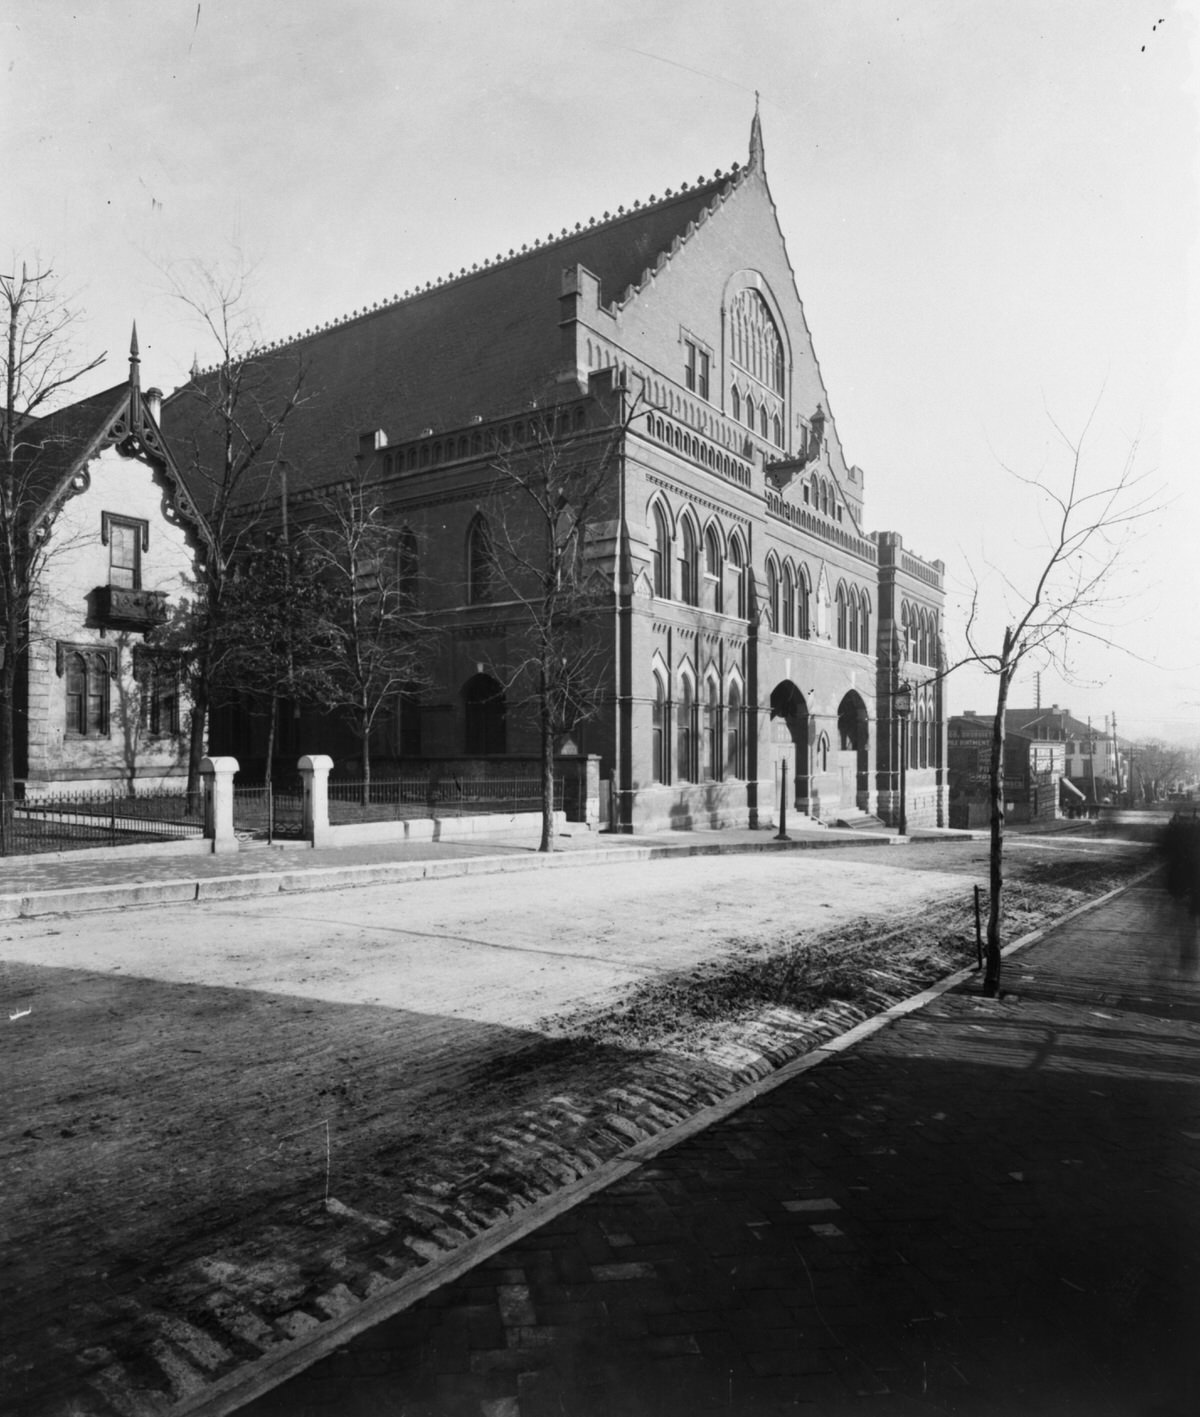 The Ryman Auditorium in Nashville, 1890